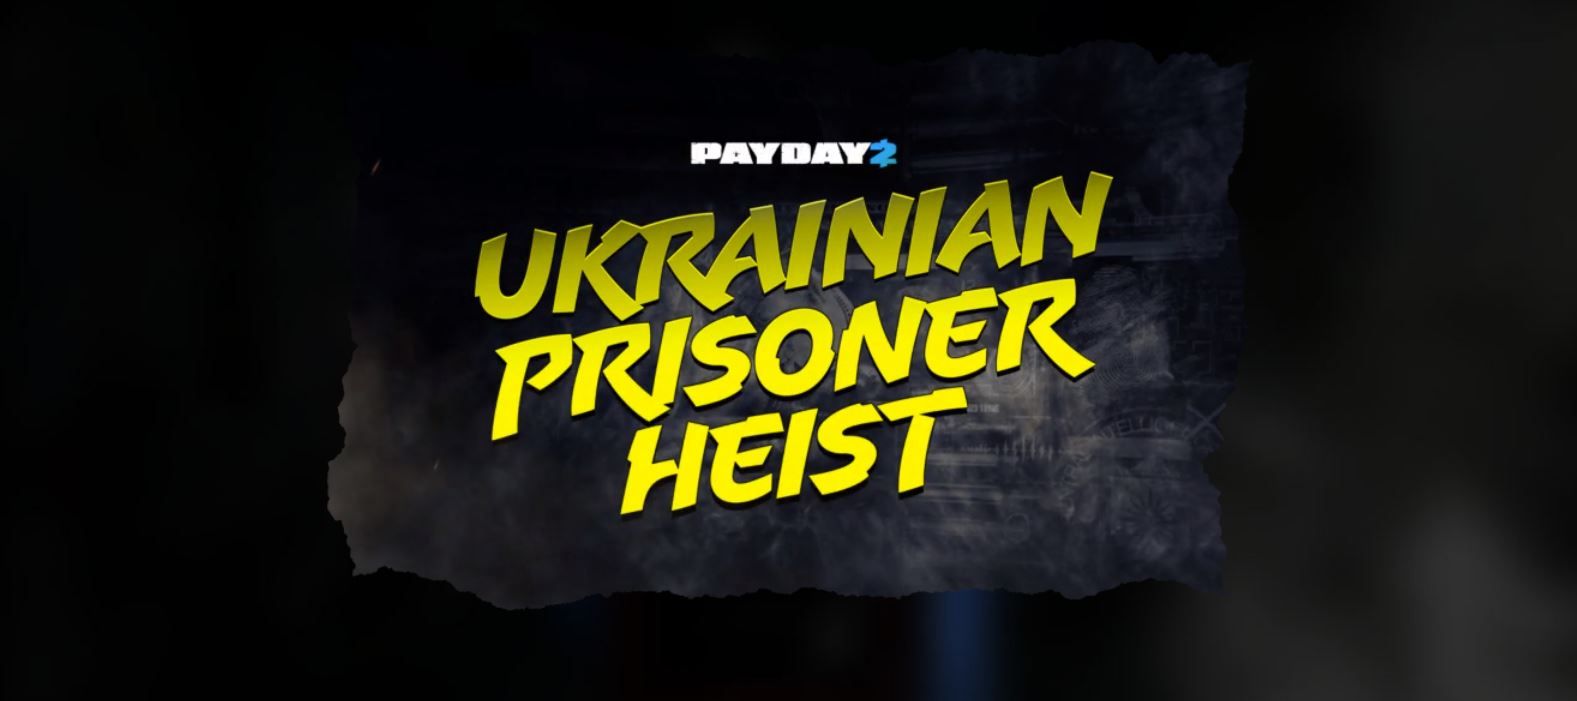 Payday 2 Ukrainian Prisoner Heist Release Date